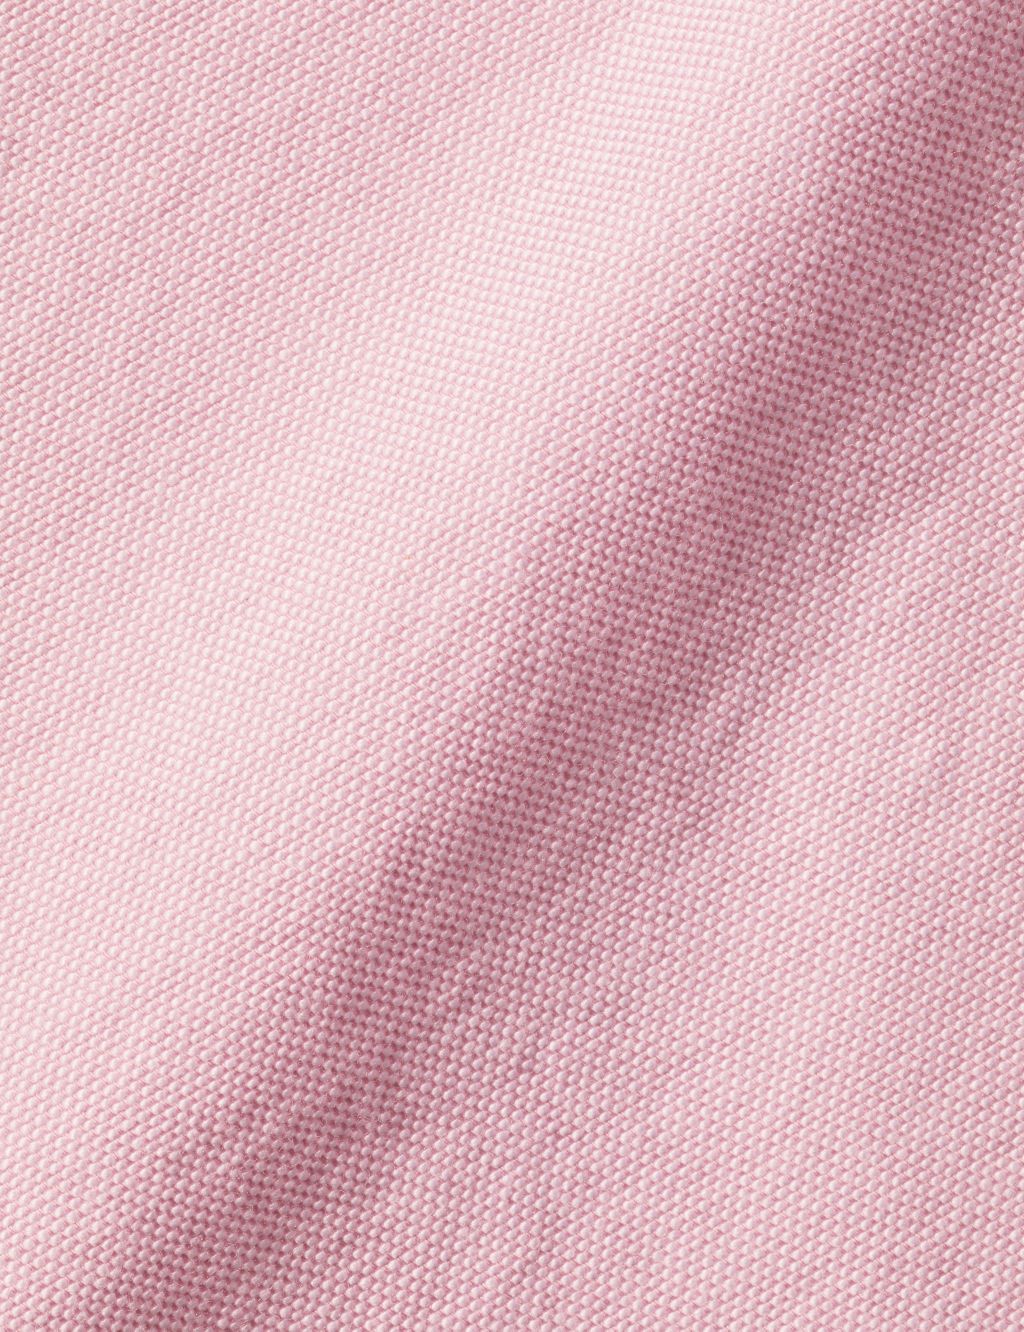 Slim Fit Pure Cotton Oxford Shirt image 6